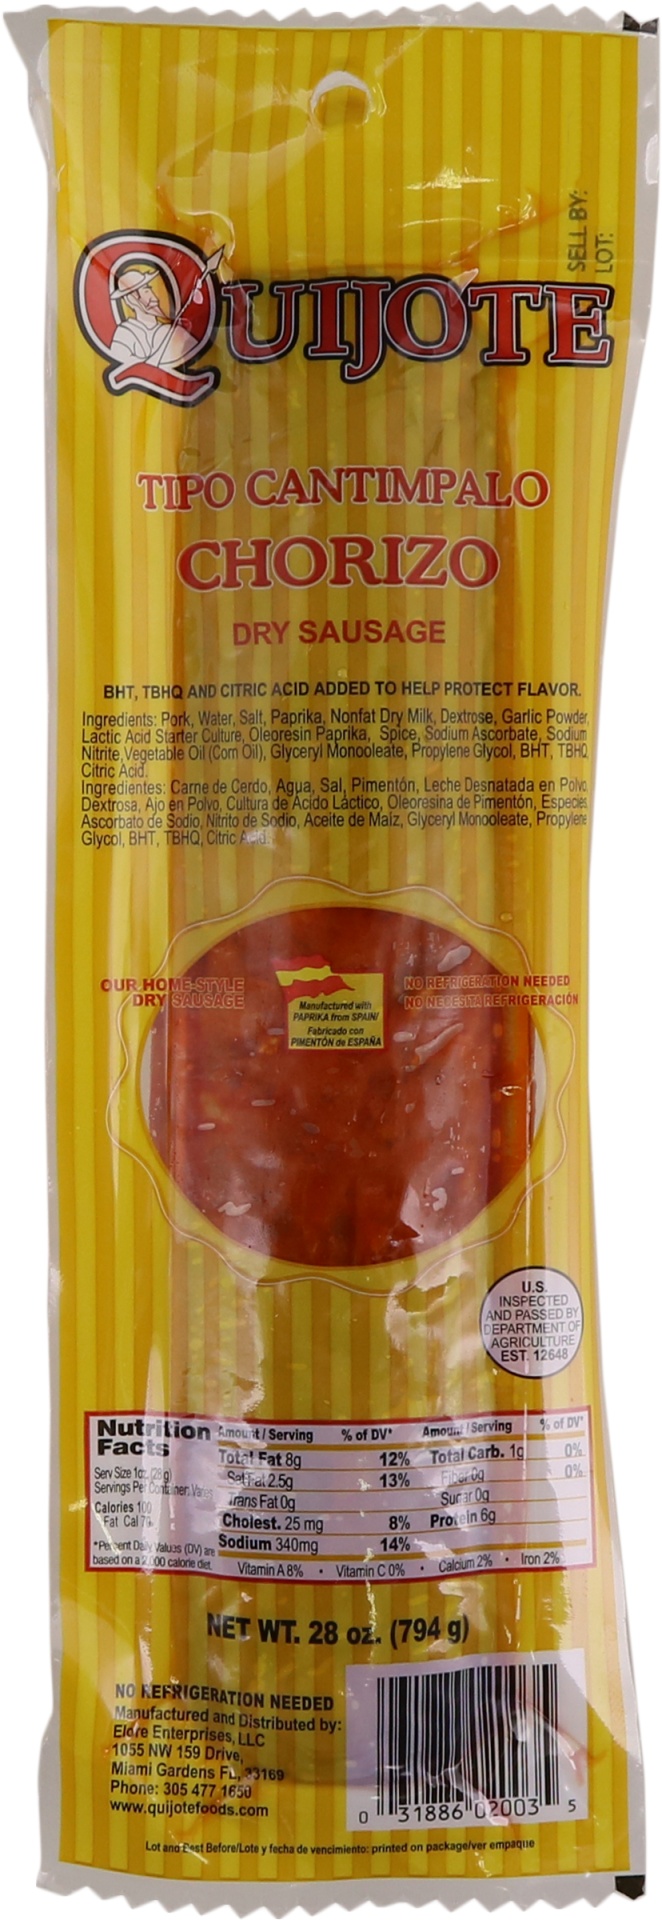 slide 1 of 1, Quijote Tipo Cantimpalo Chorizo Dry Sausage, 1.7 lb